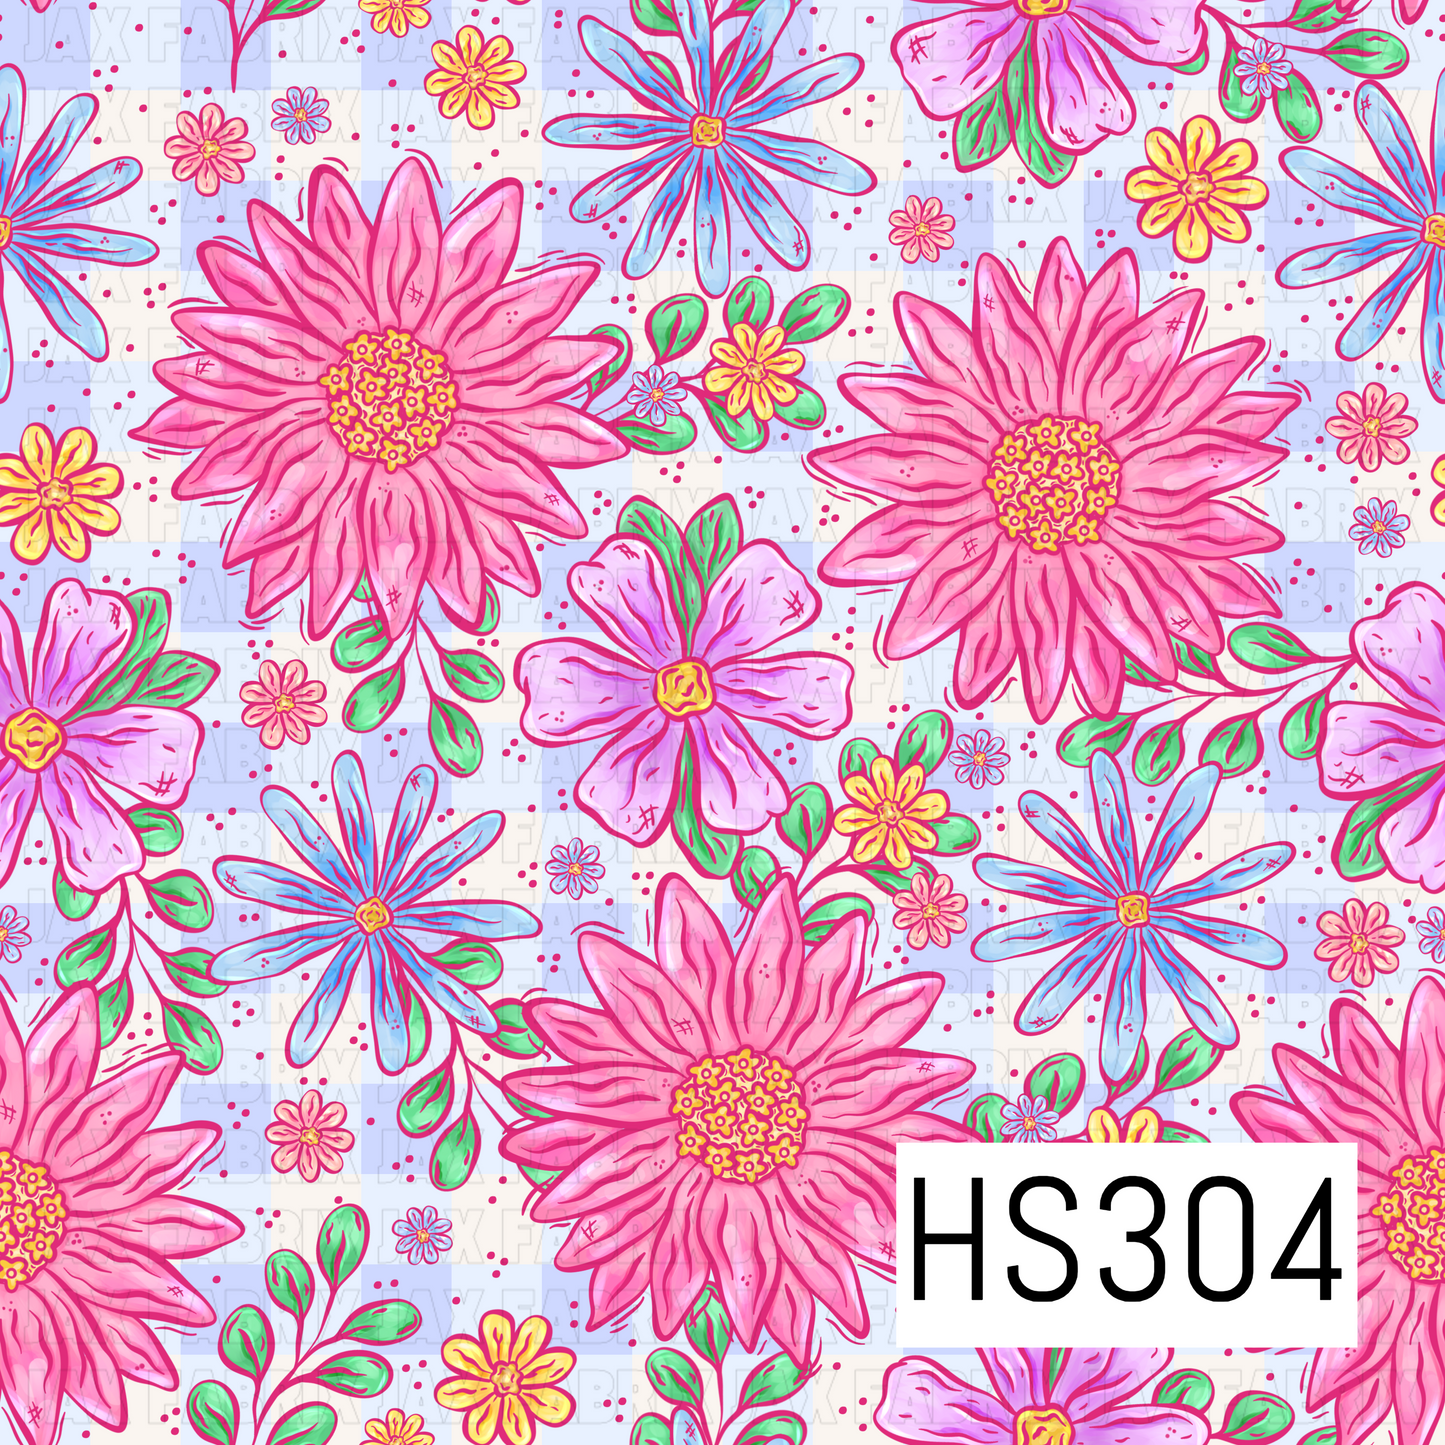 HS304